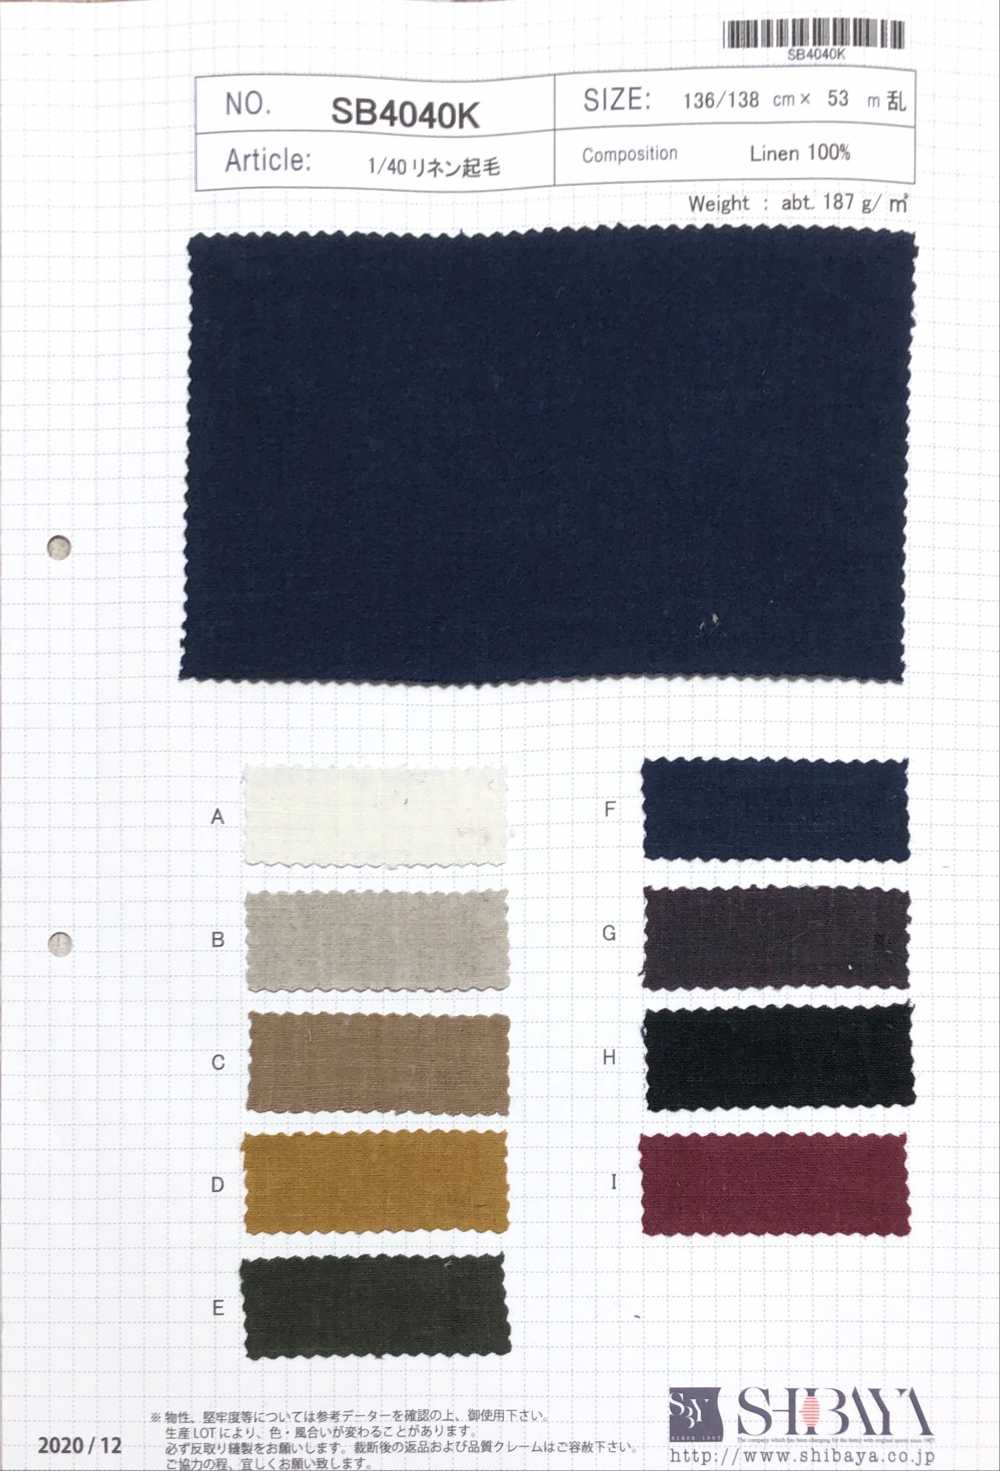 SB4040K 1/40 Fuzzy Linen[Têxtil / Tecido] SHIBAYA